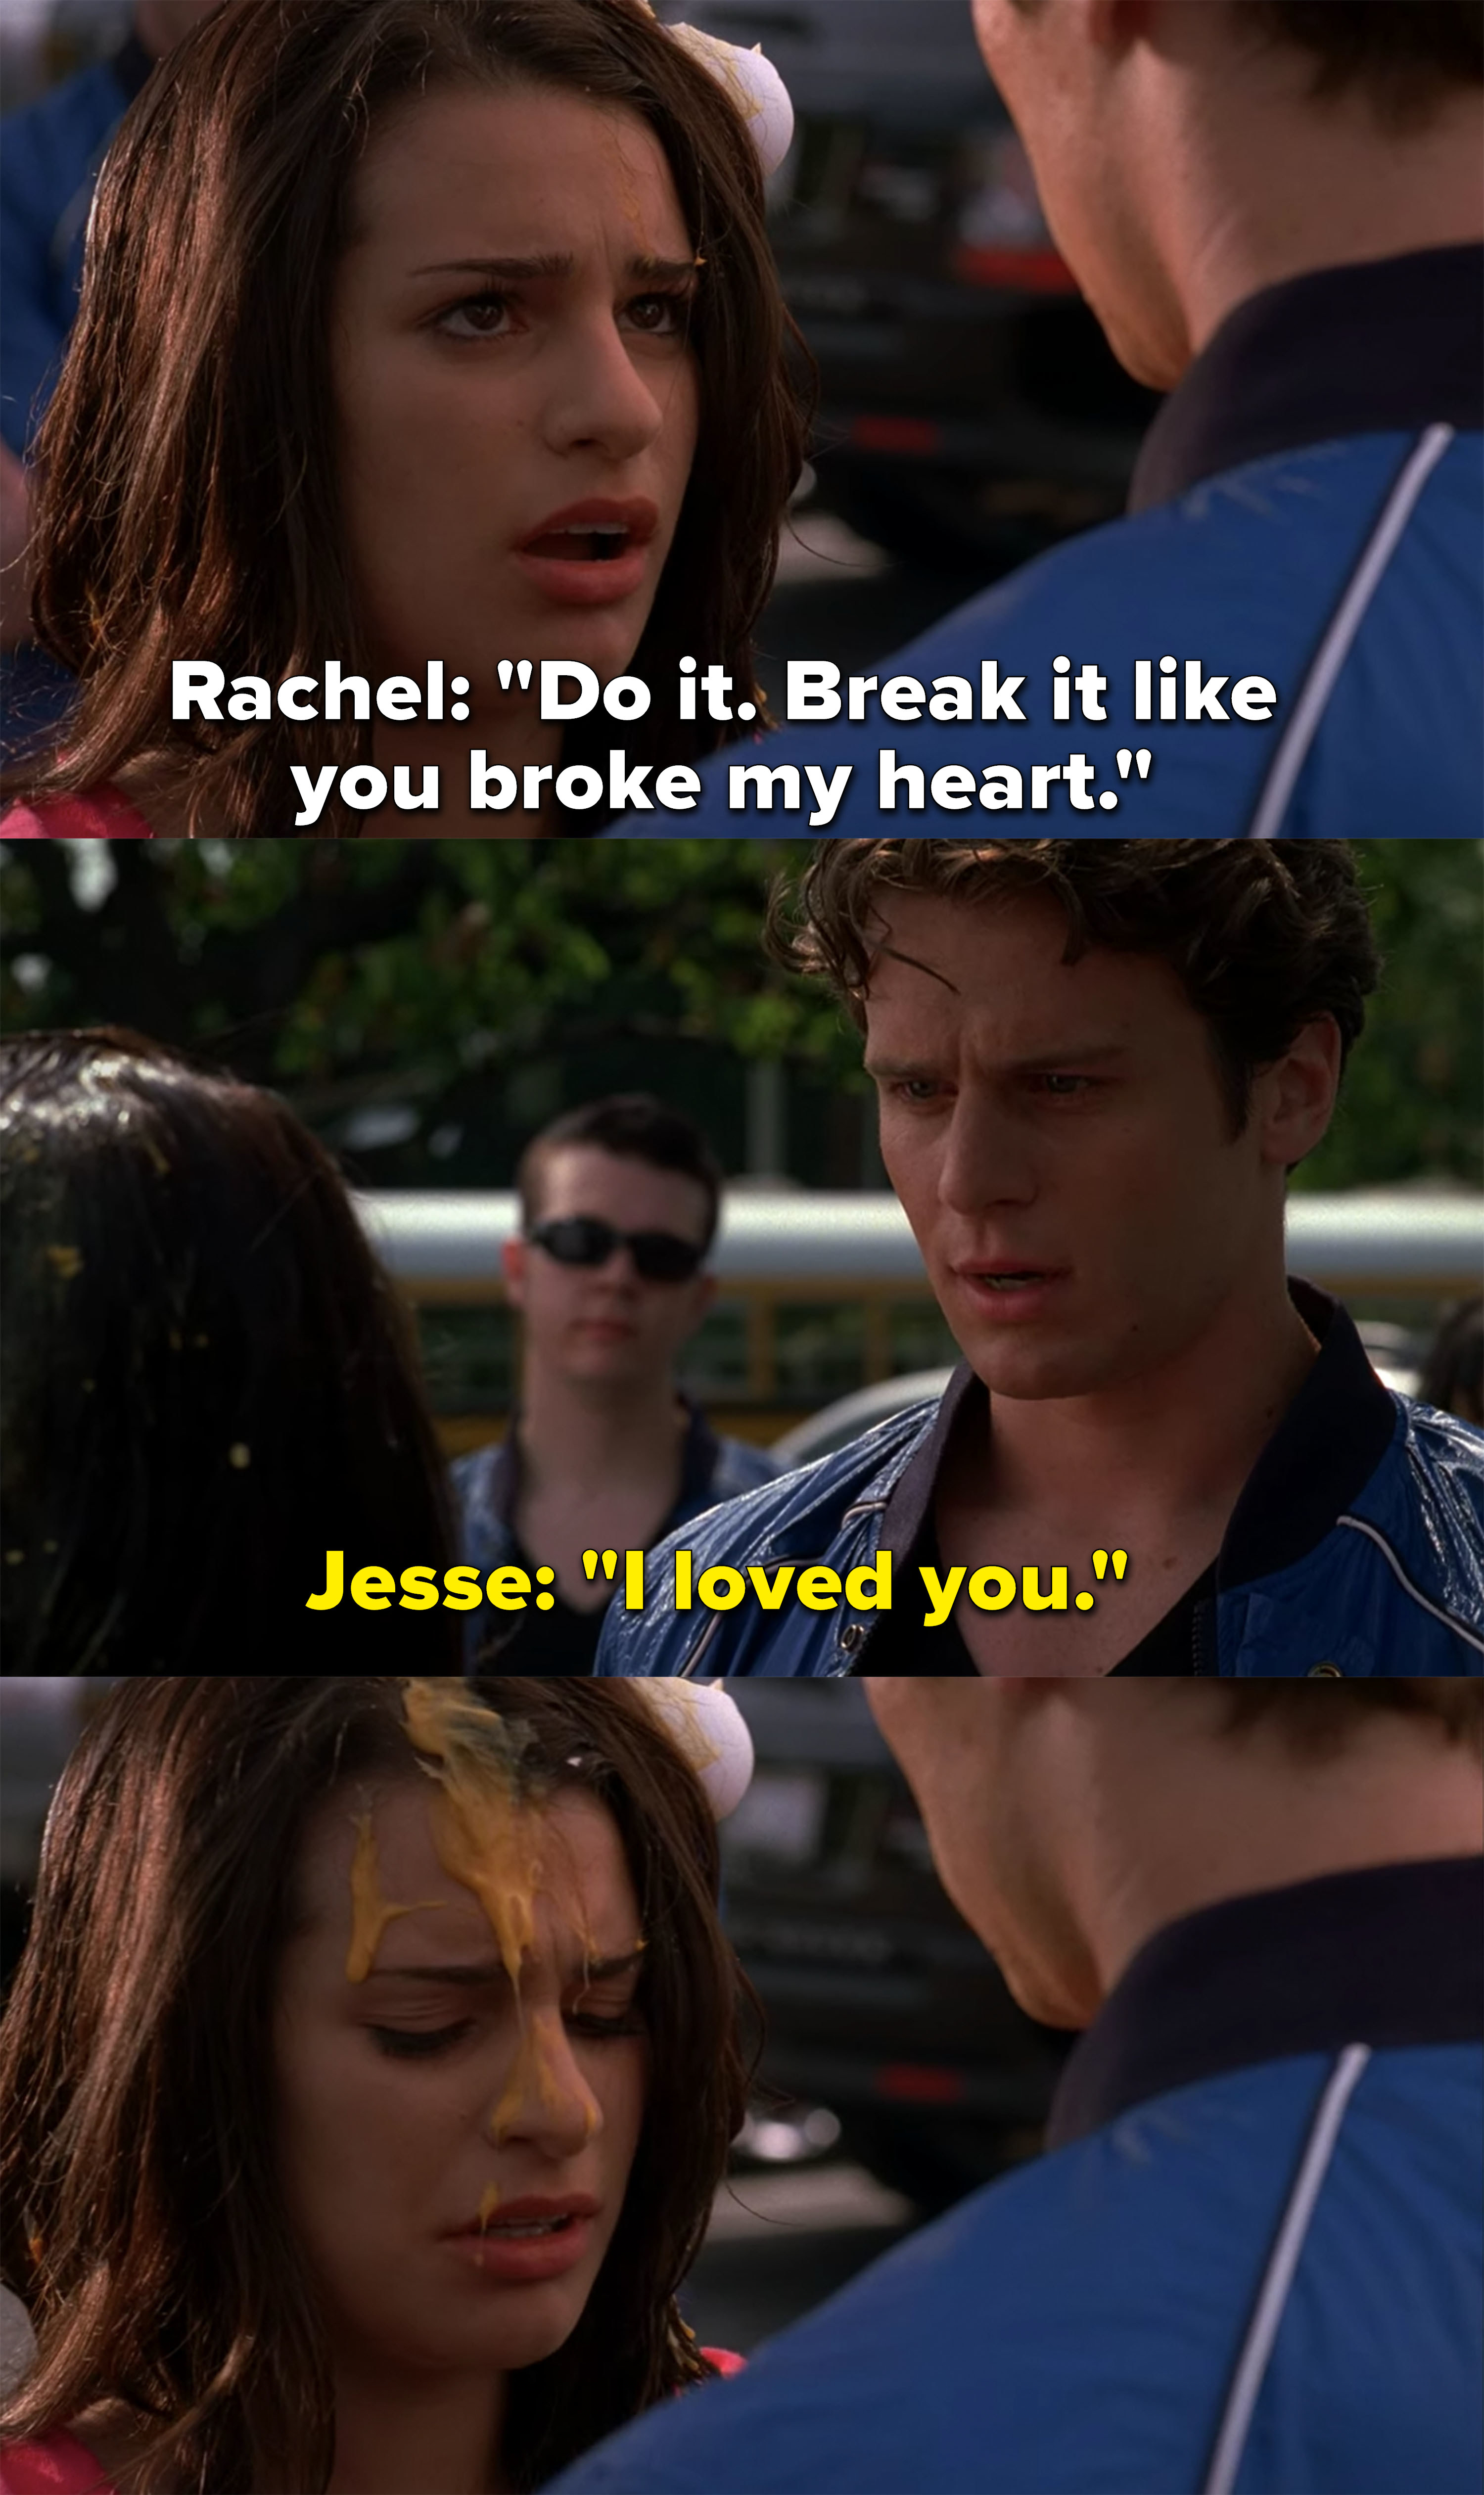 Rachel: &quot;break it like you broke my heart&quot; Jesse dramatically cracks egg, &quot;I loved you&quot;